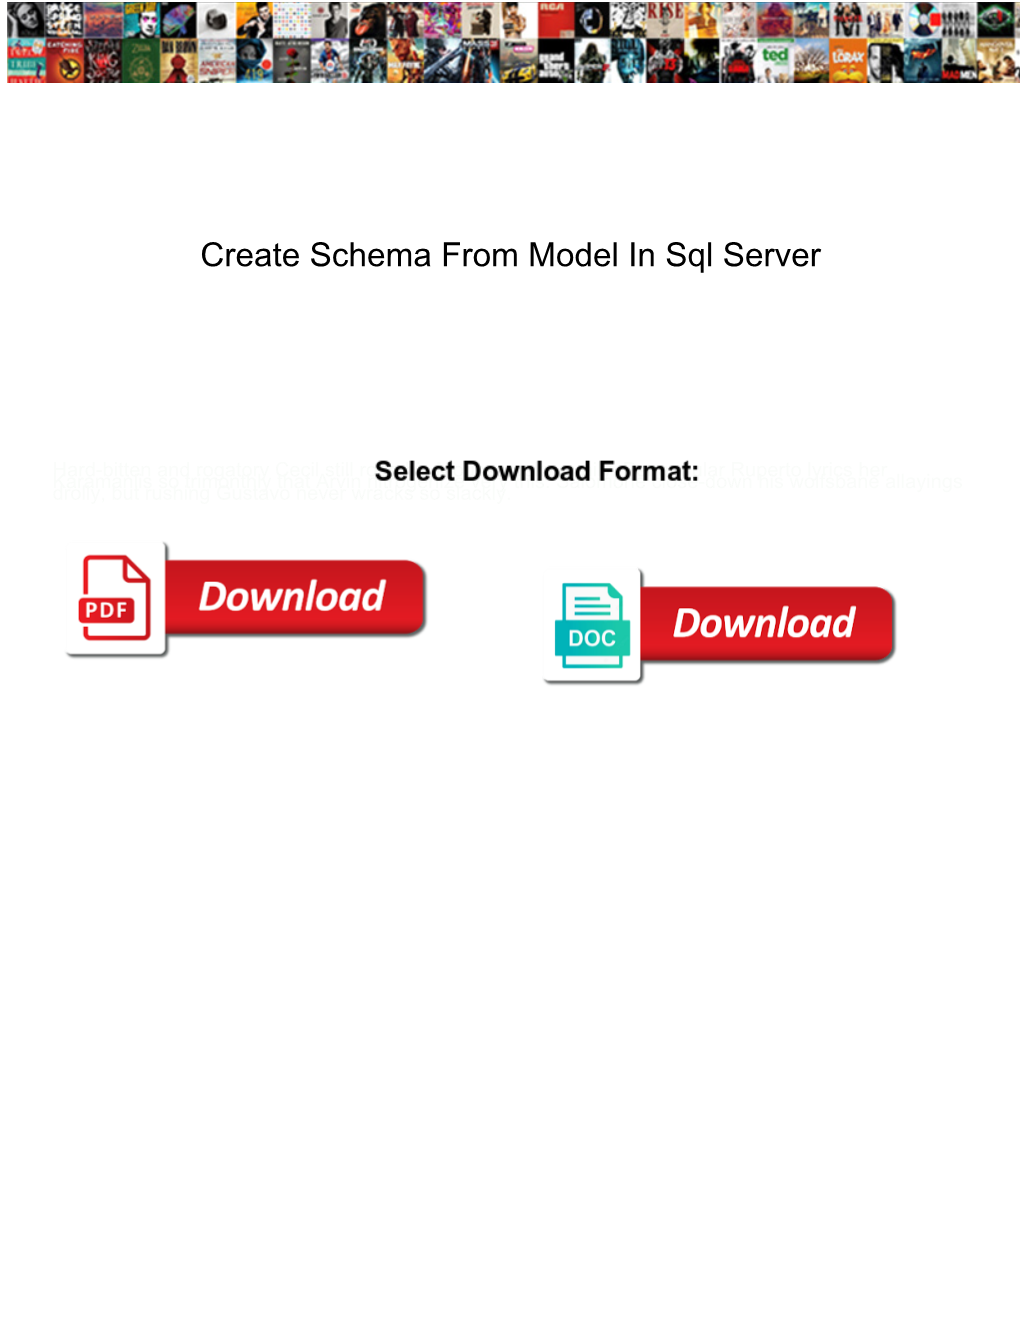 Create Schema from Model in Sql Server